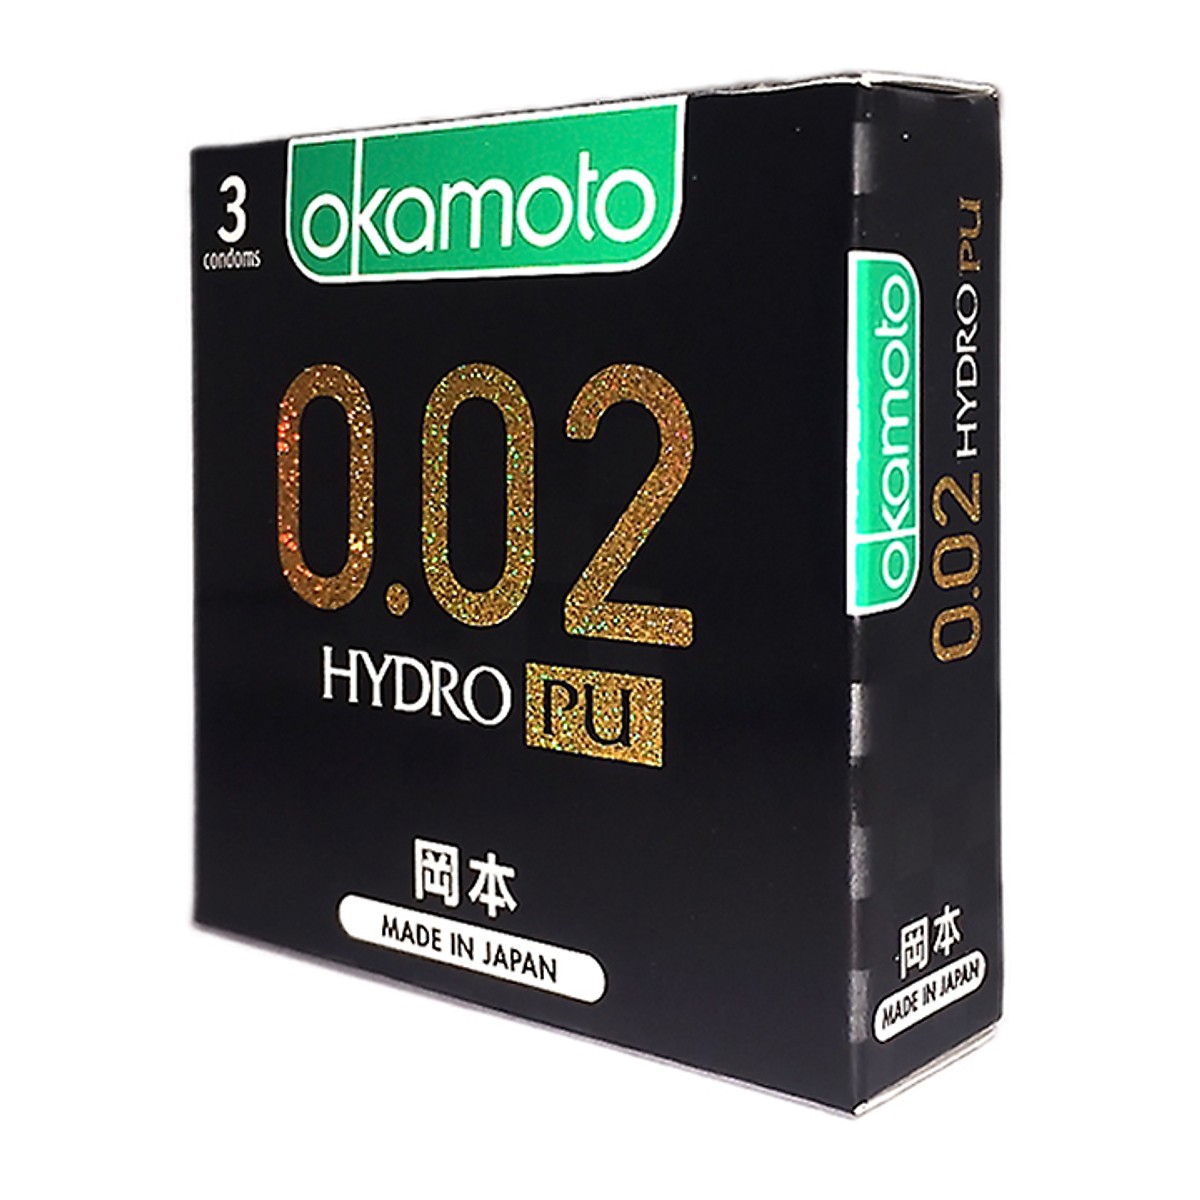 Bao cao su siêu mỏng Okamoto 002 PU, Hộp 3 cái